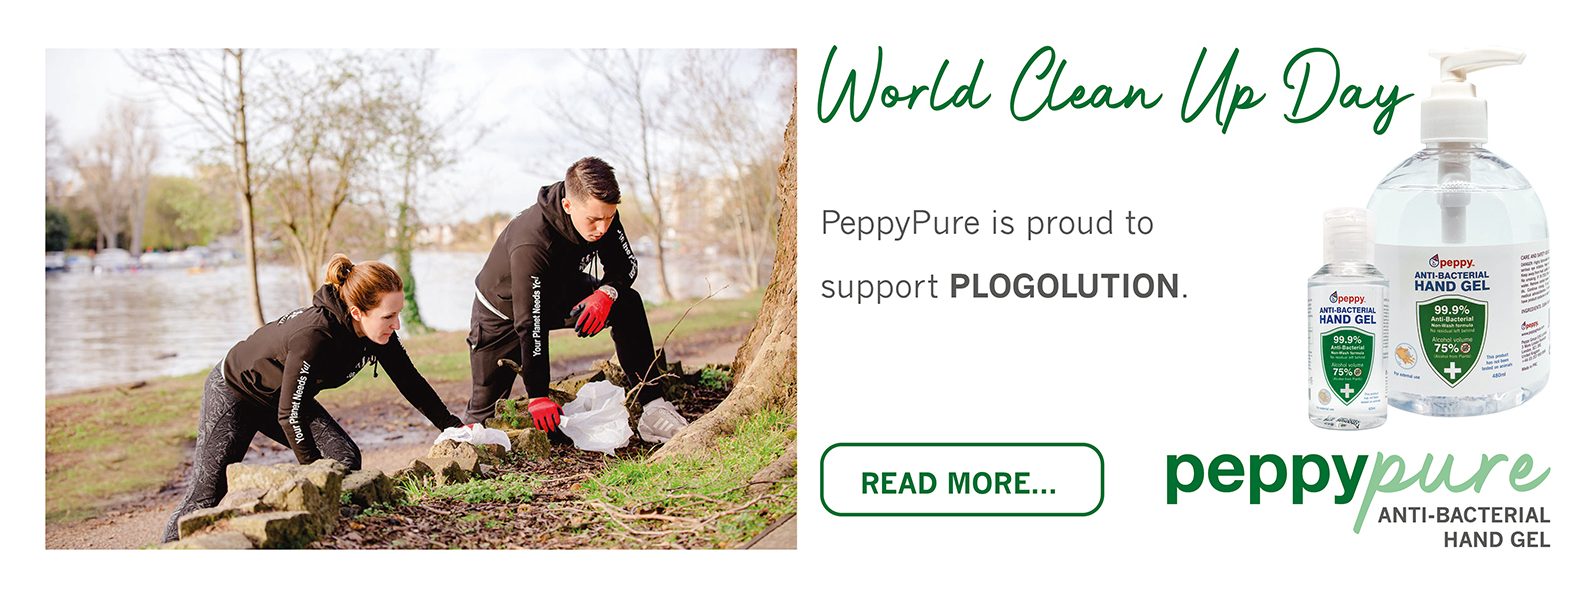 PeppyPure supports Plogolution